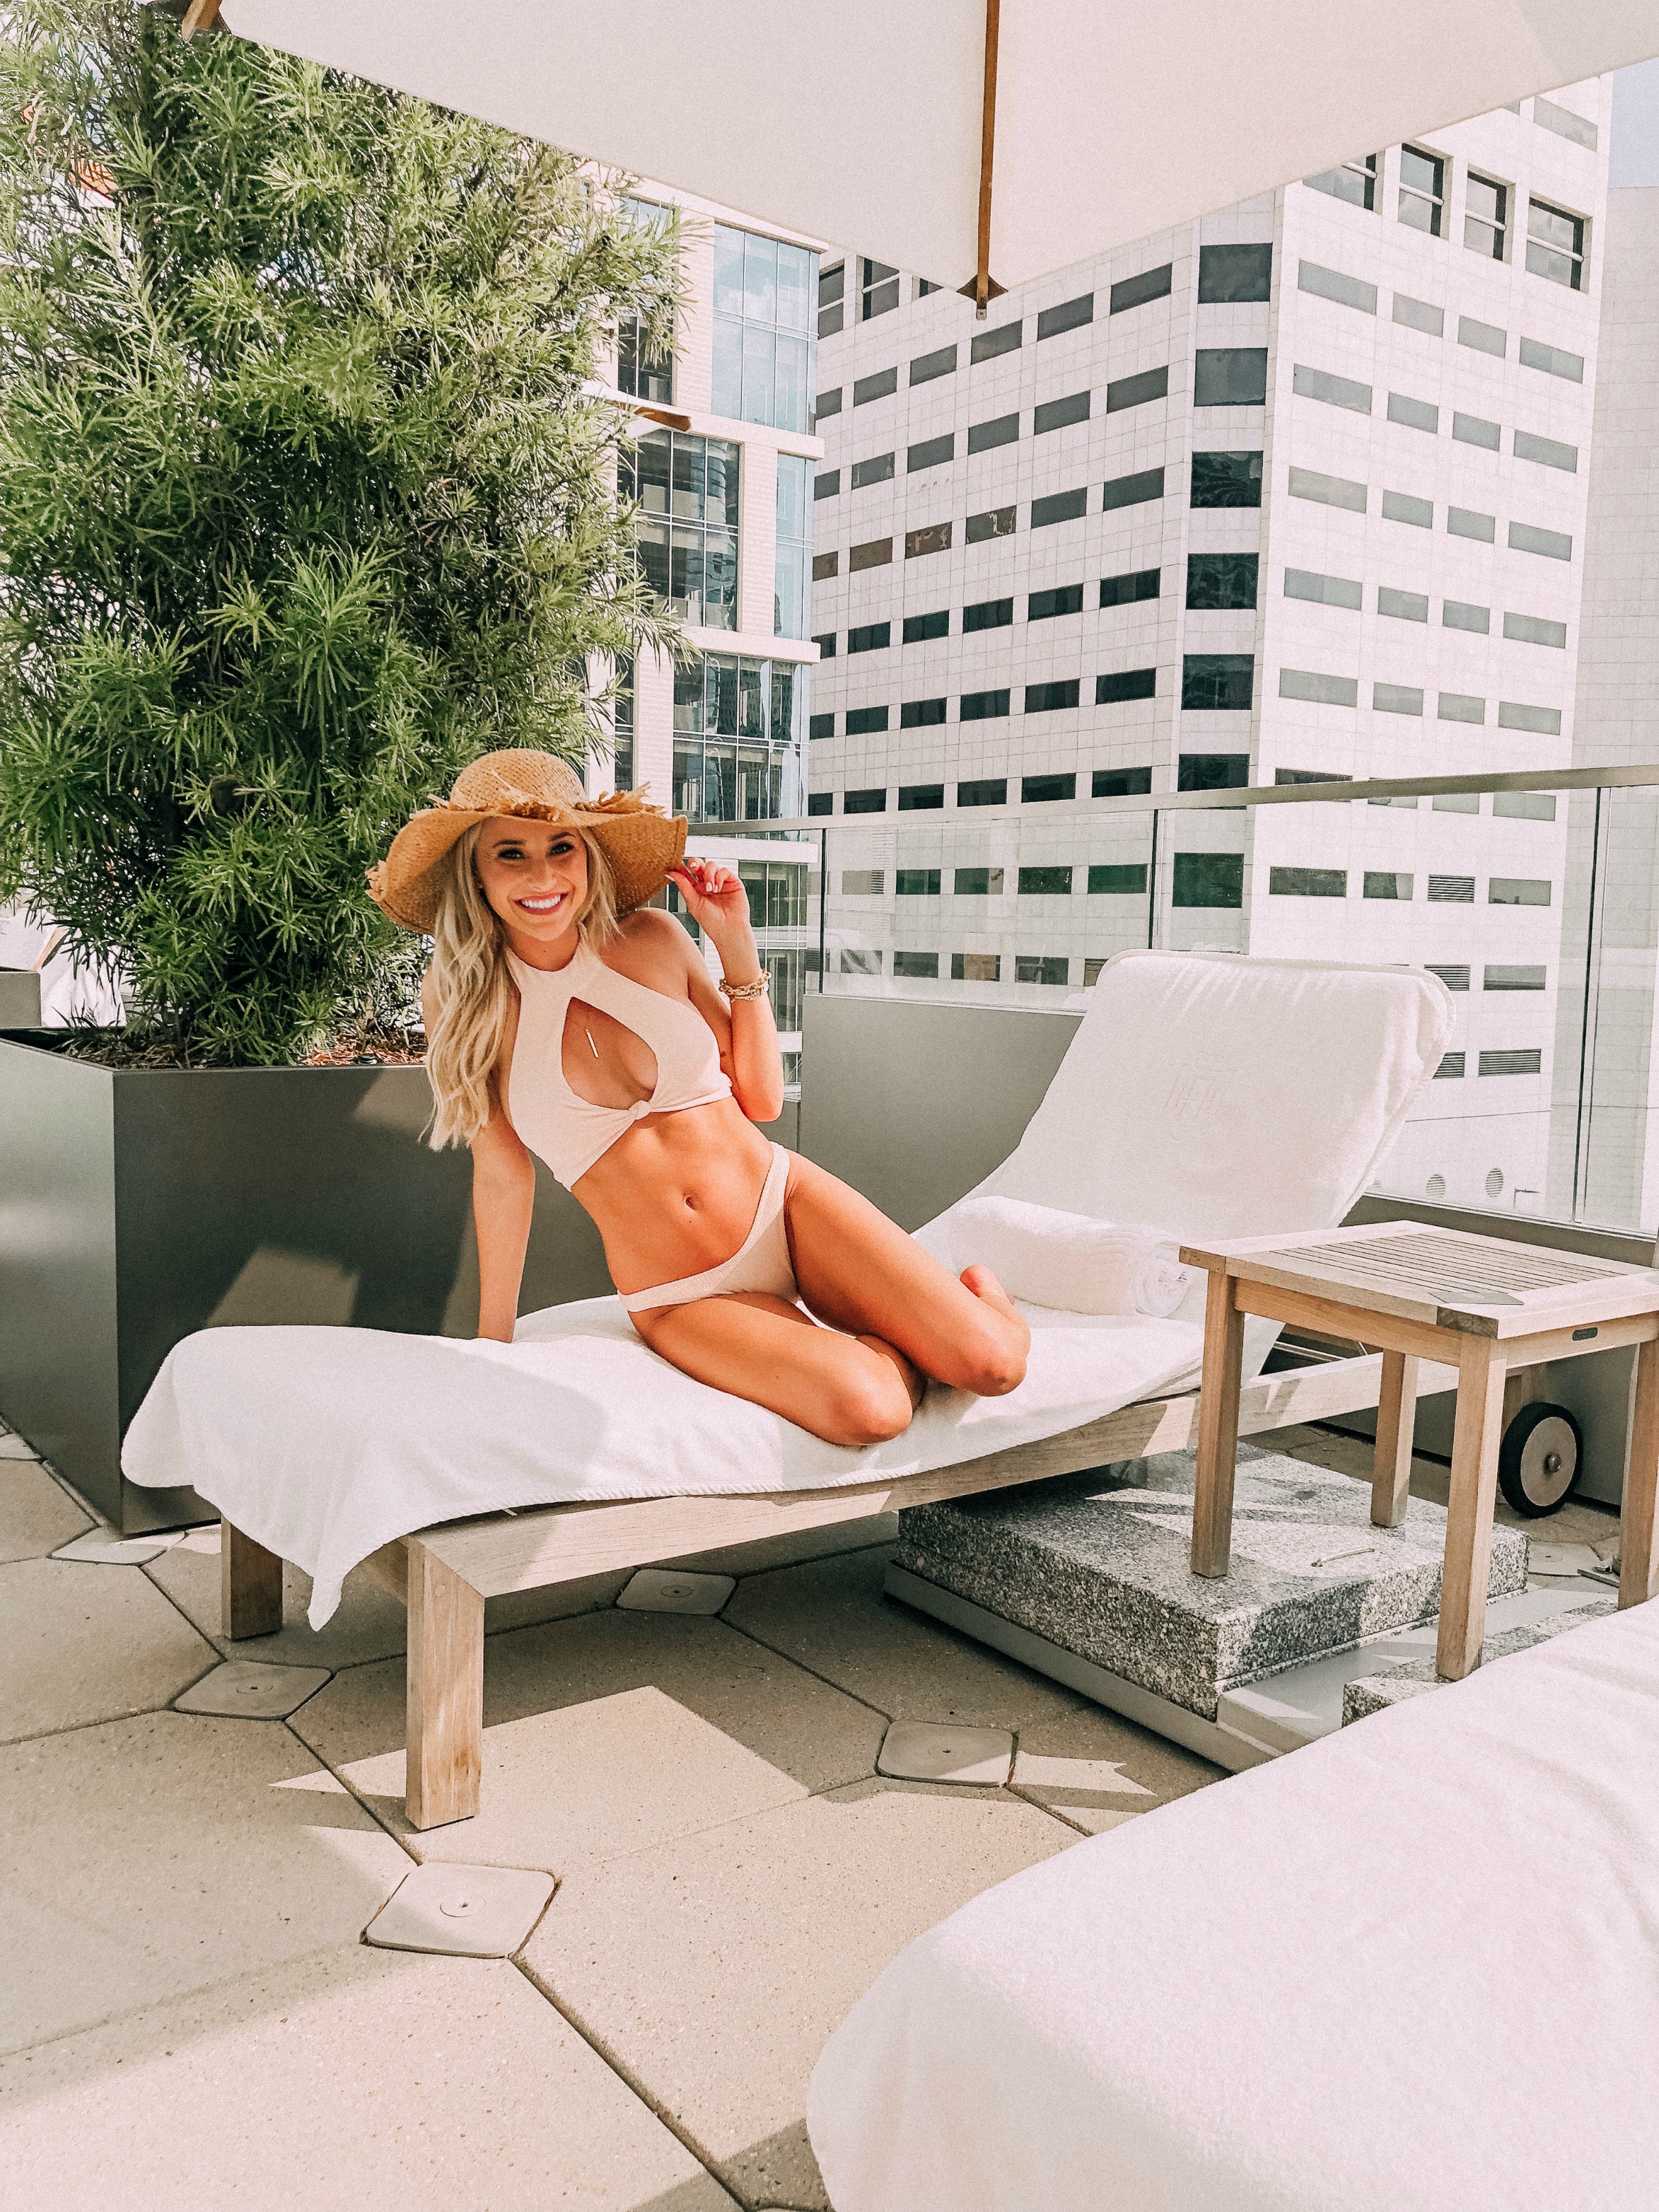 Swimsuit Pool Deck - Dallas Fashion Model, Fashion & Lifestyle Blogger - Peyton Mabry